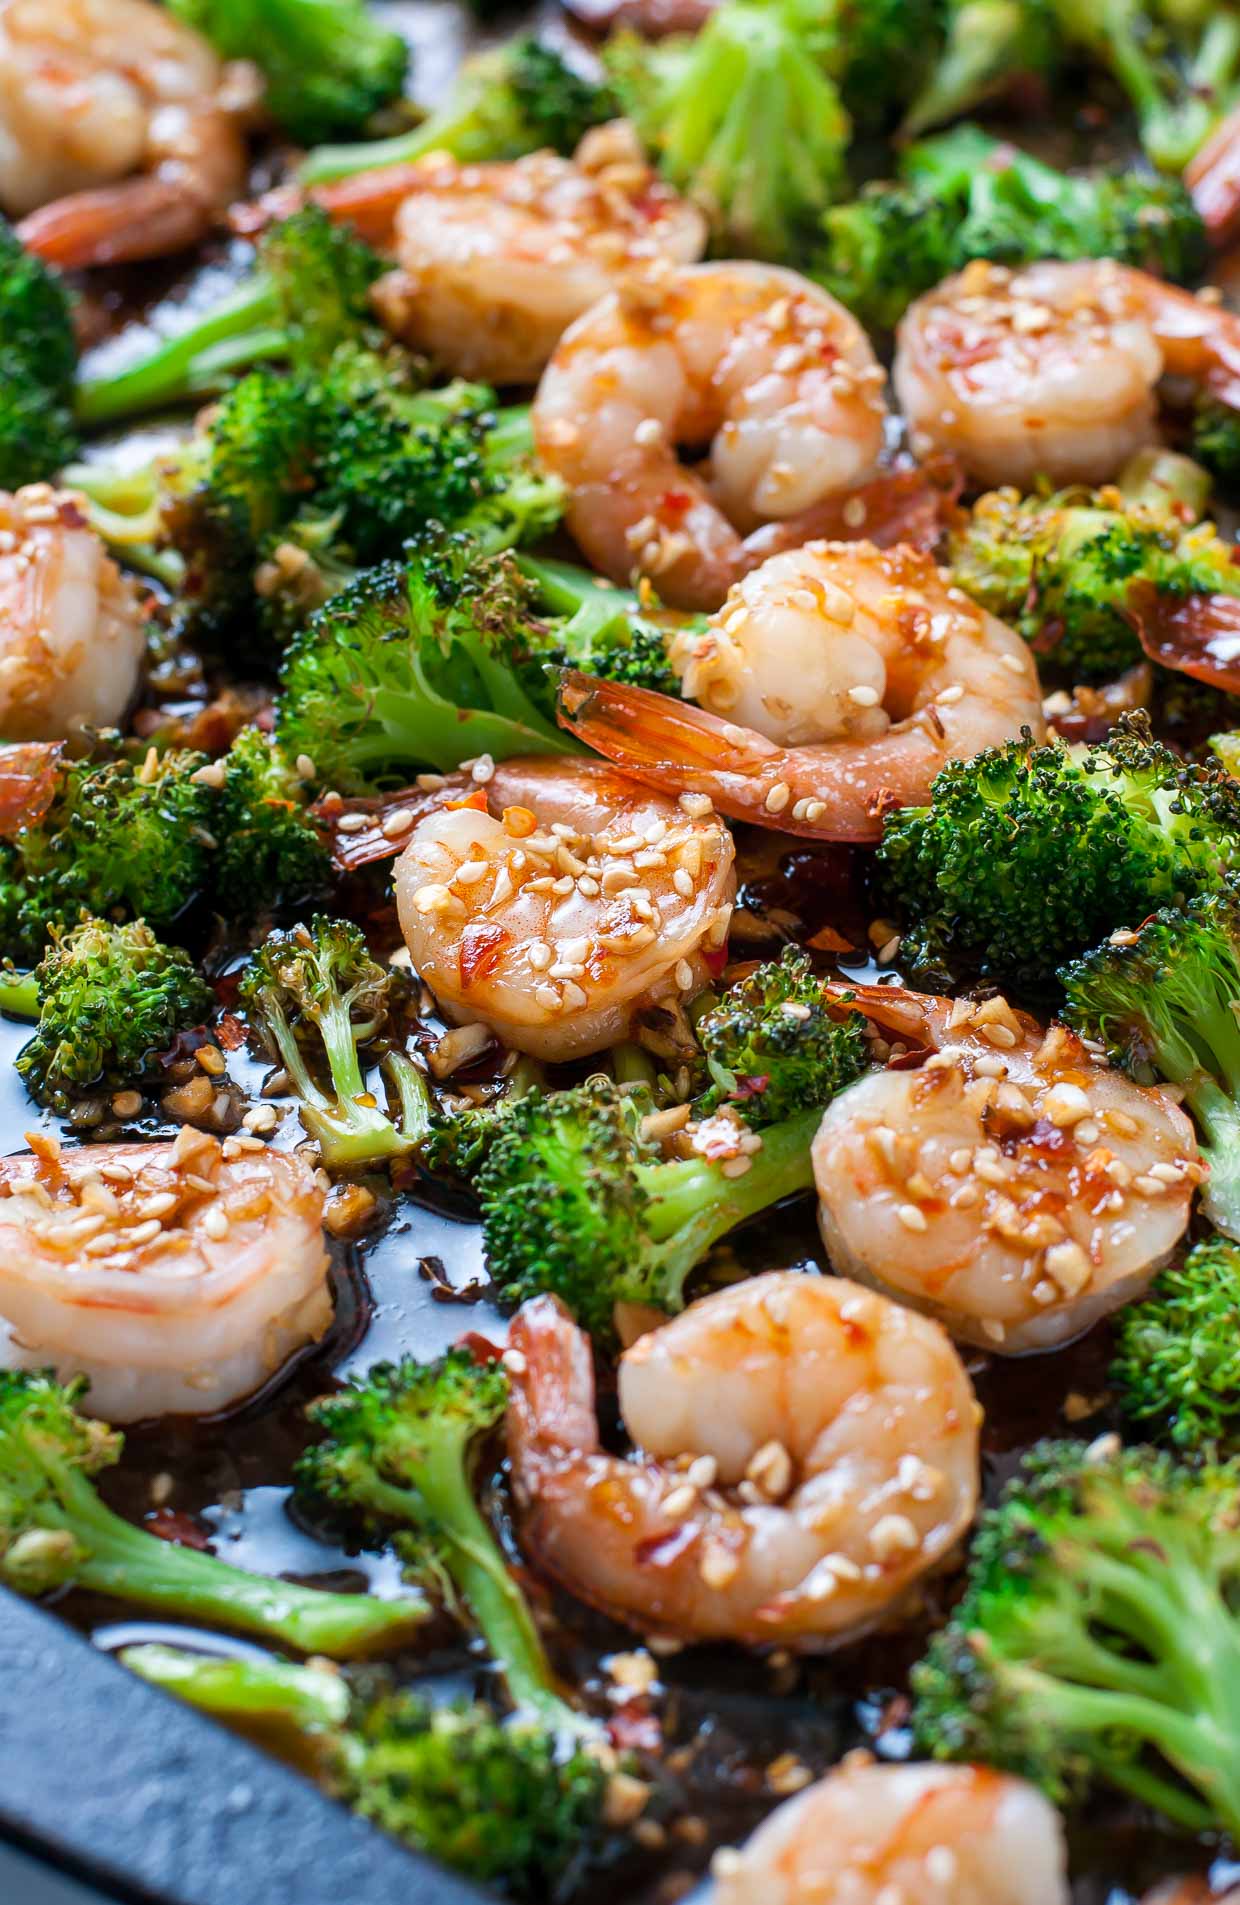 Shrimp and broccoli. 